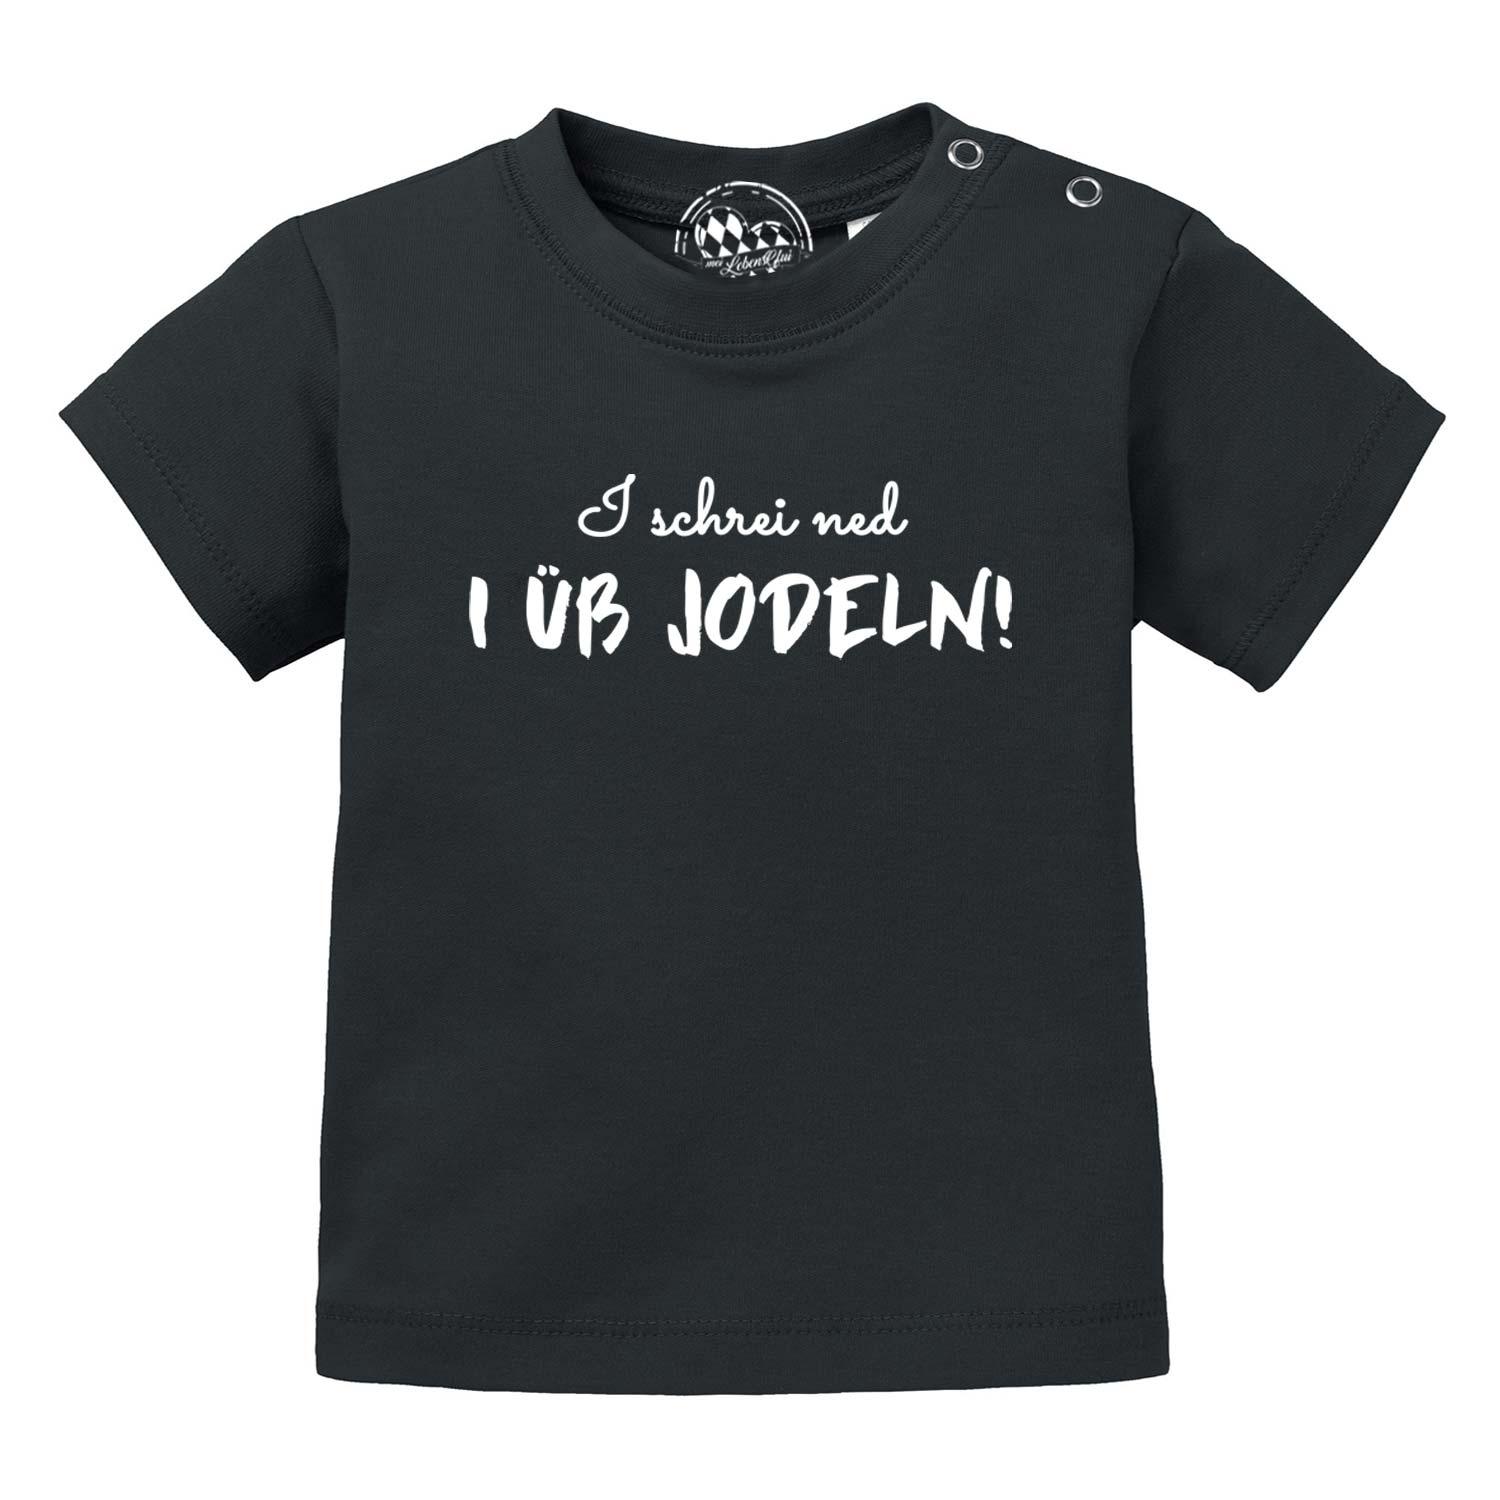 Baby T-Shirt "I üb jodeln" - bavariashop - mei LebensGfui